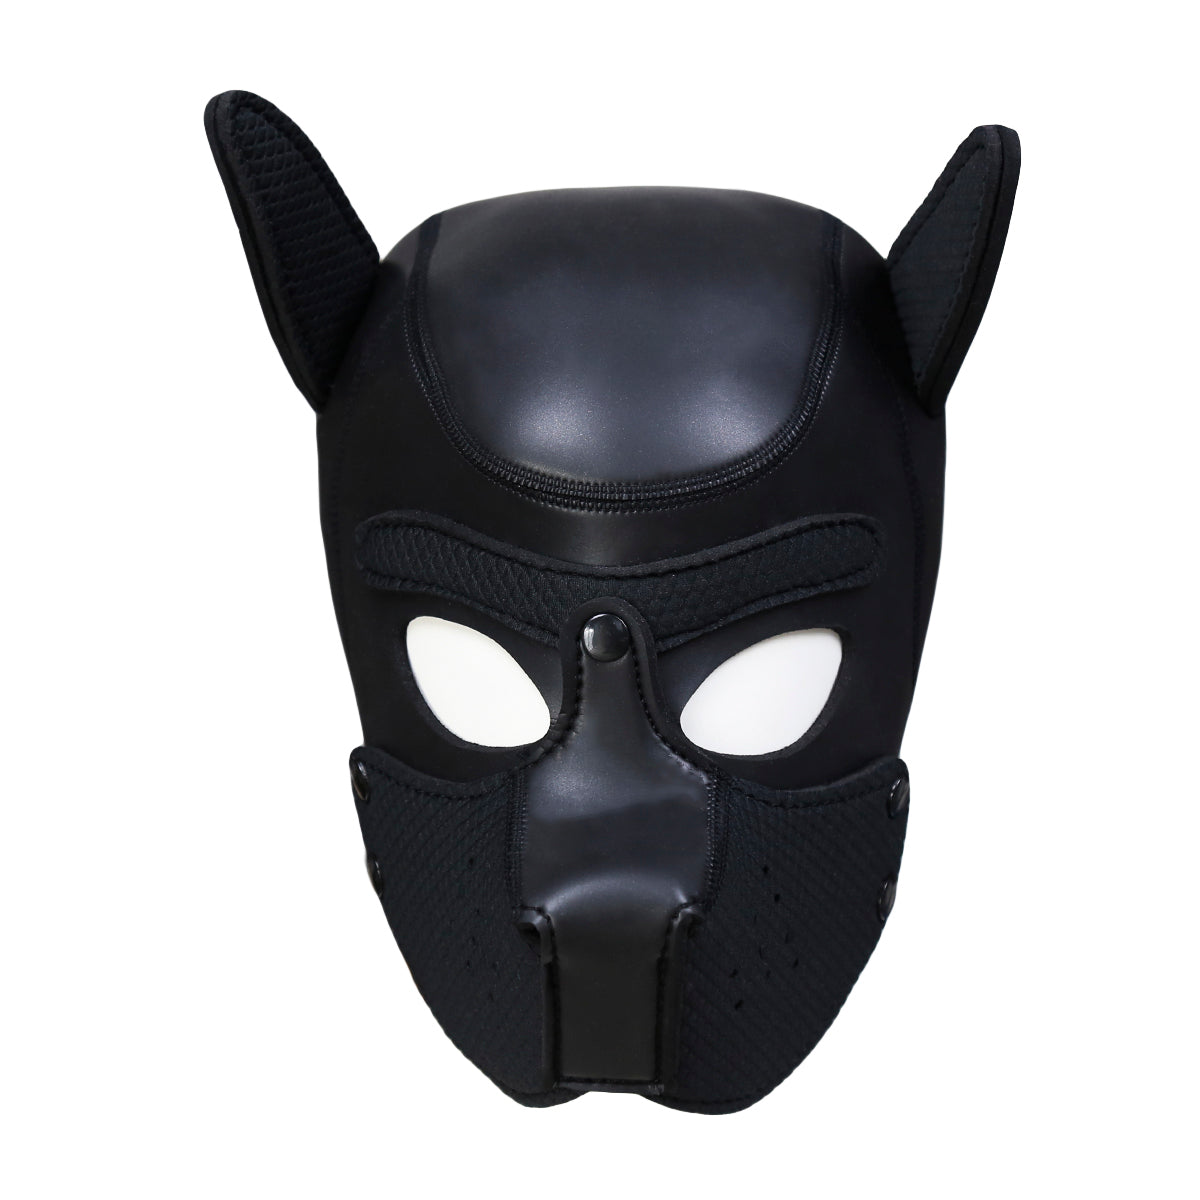 The K9 BDSM/ Fetish Dog Mask